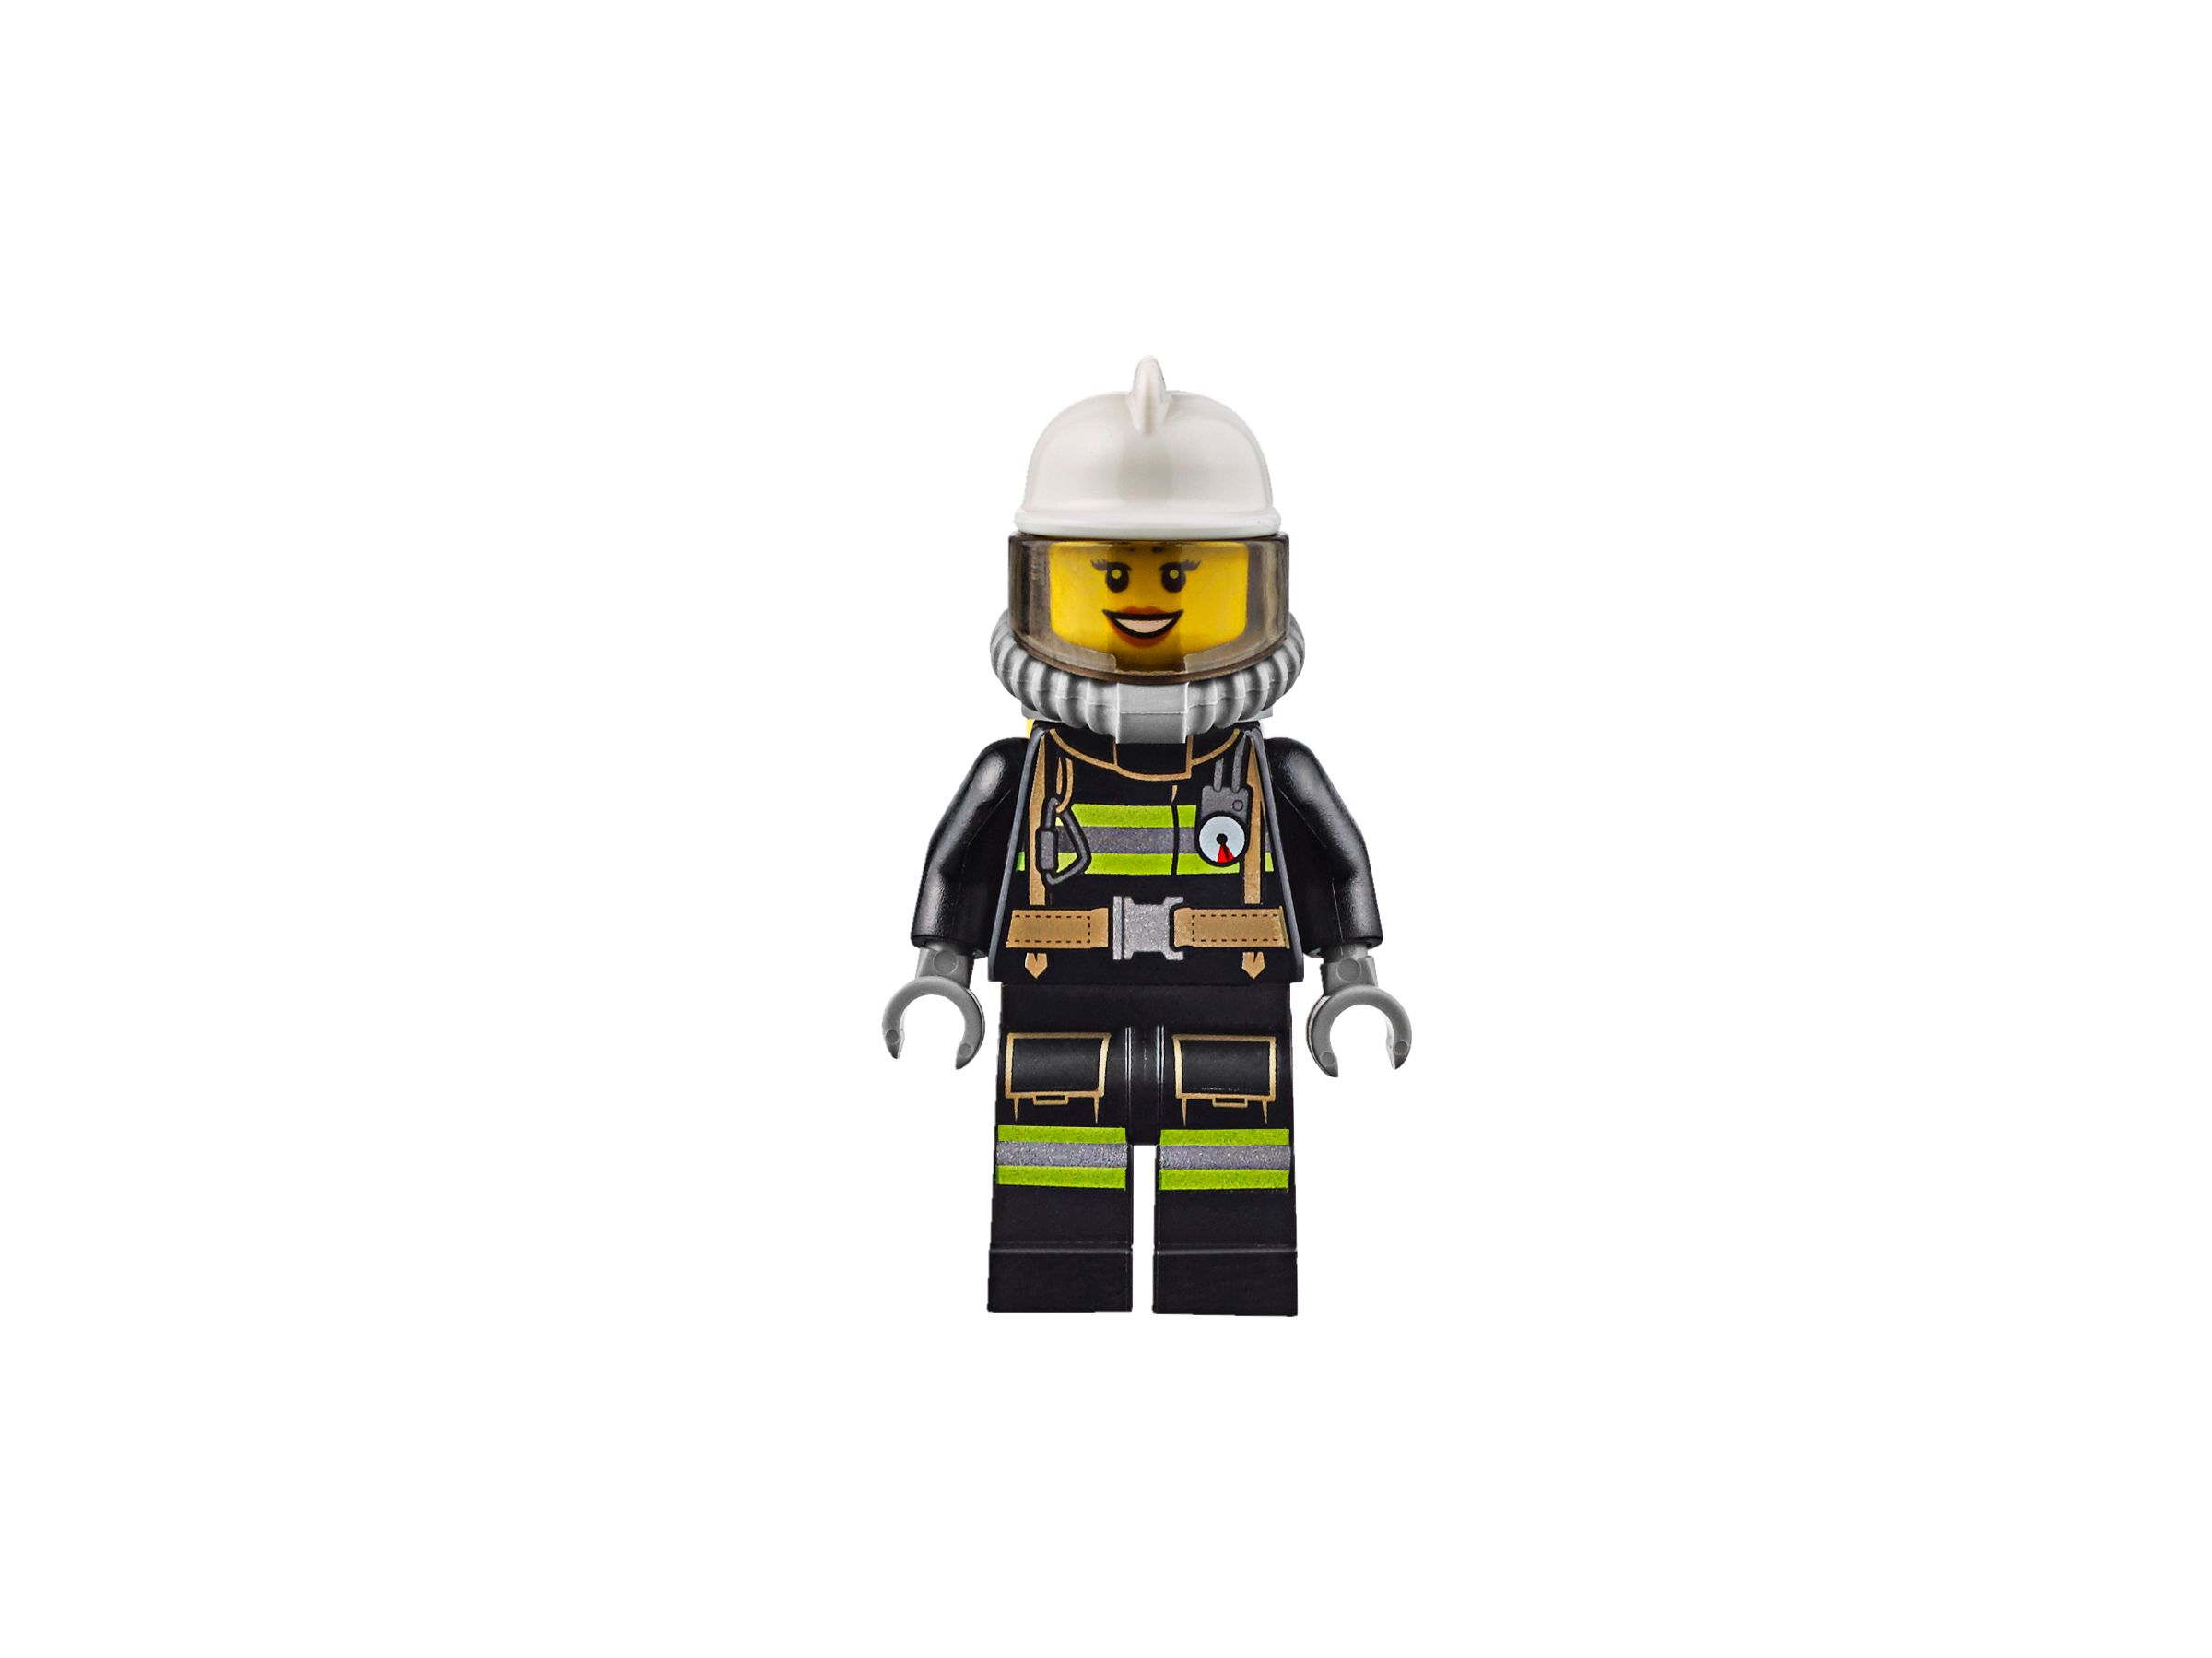 LEGO City 60111 Feuerwehr-Einsatzfahrzeug LEGO_60111_alt8.jpg